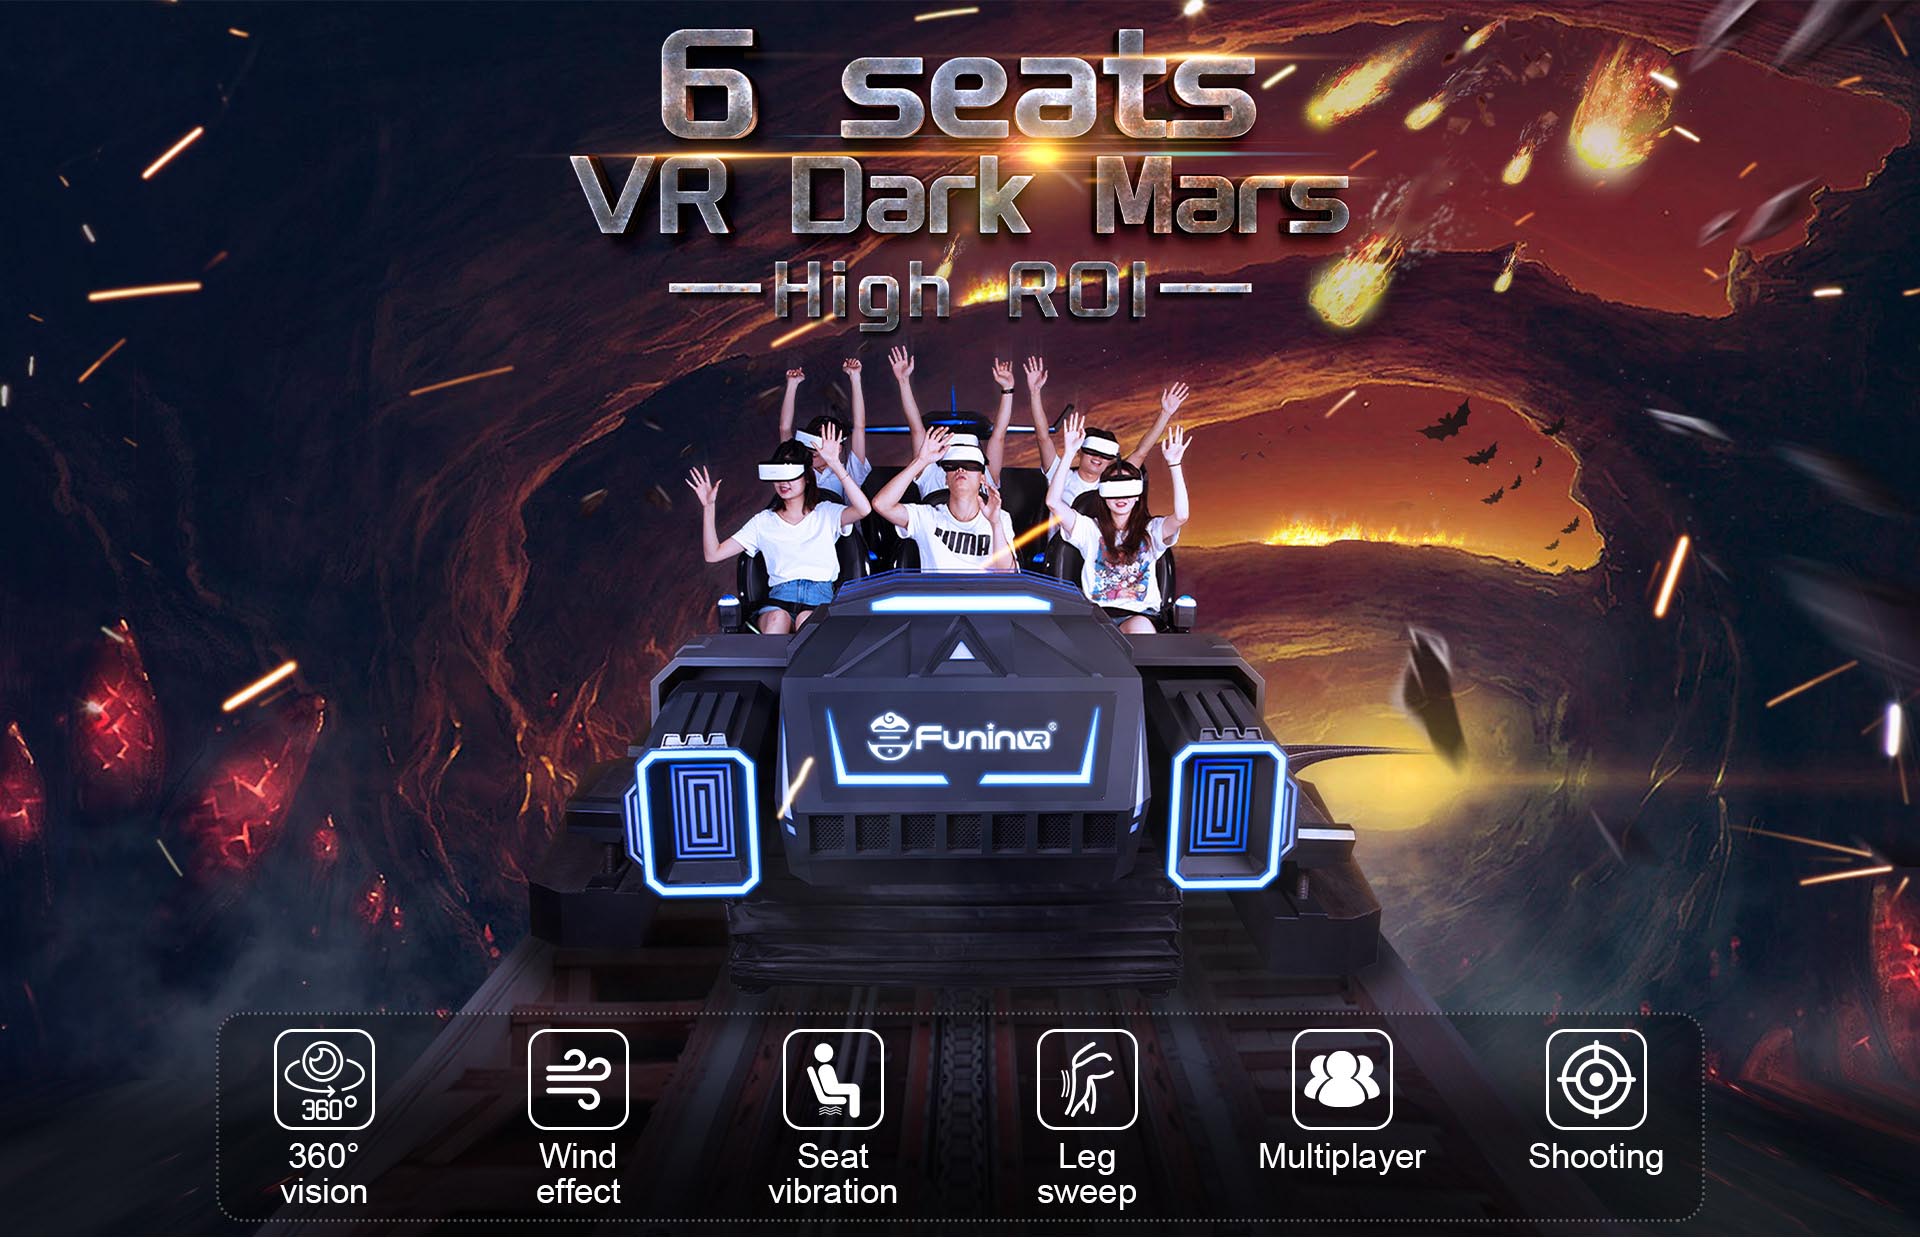 9D Virtual Reality 6 Seats VR Equipment VR Dark Mars Simulator - Dynamic Theme - 1